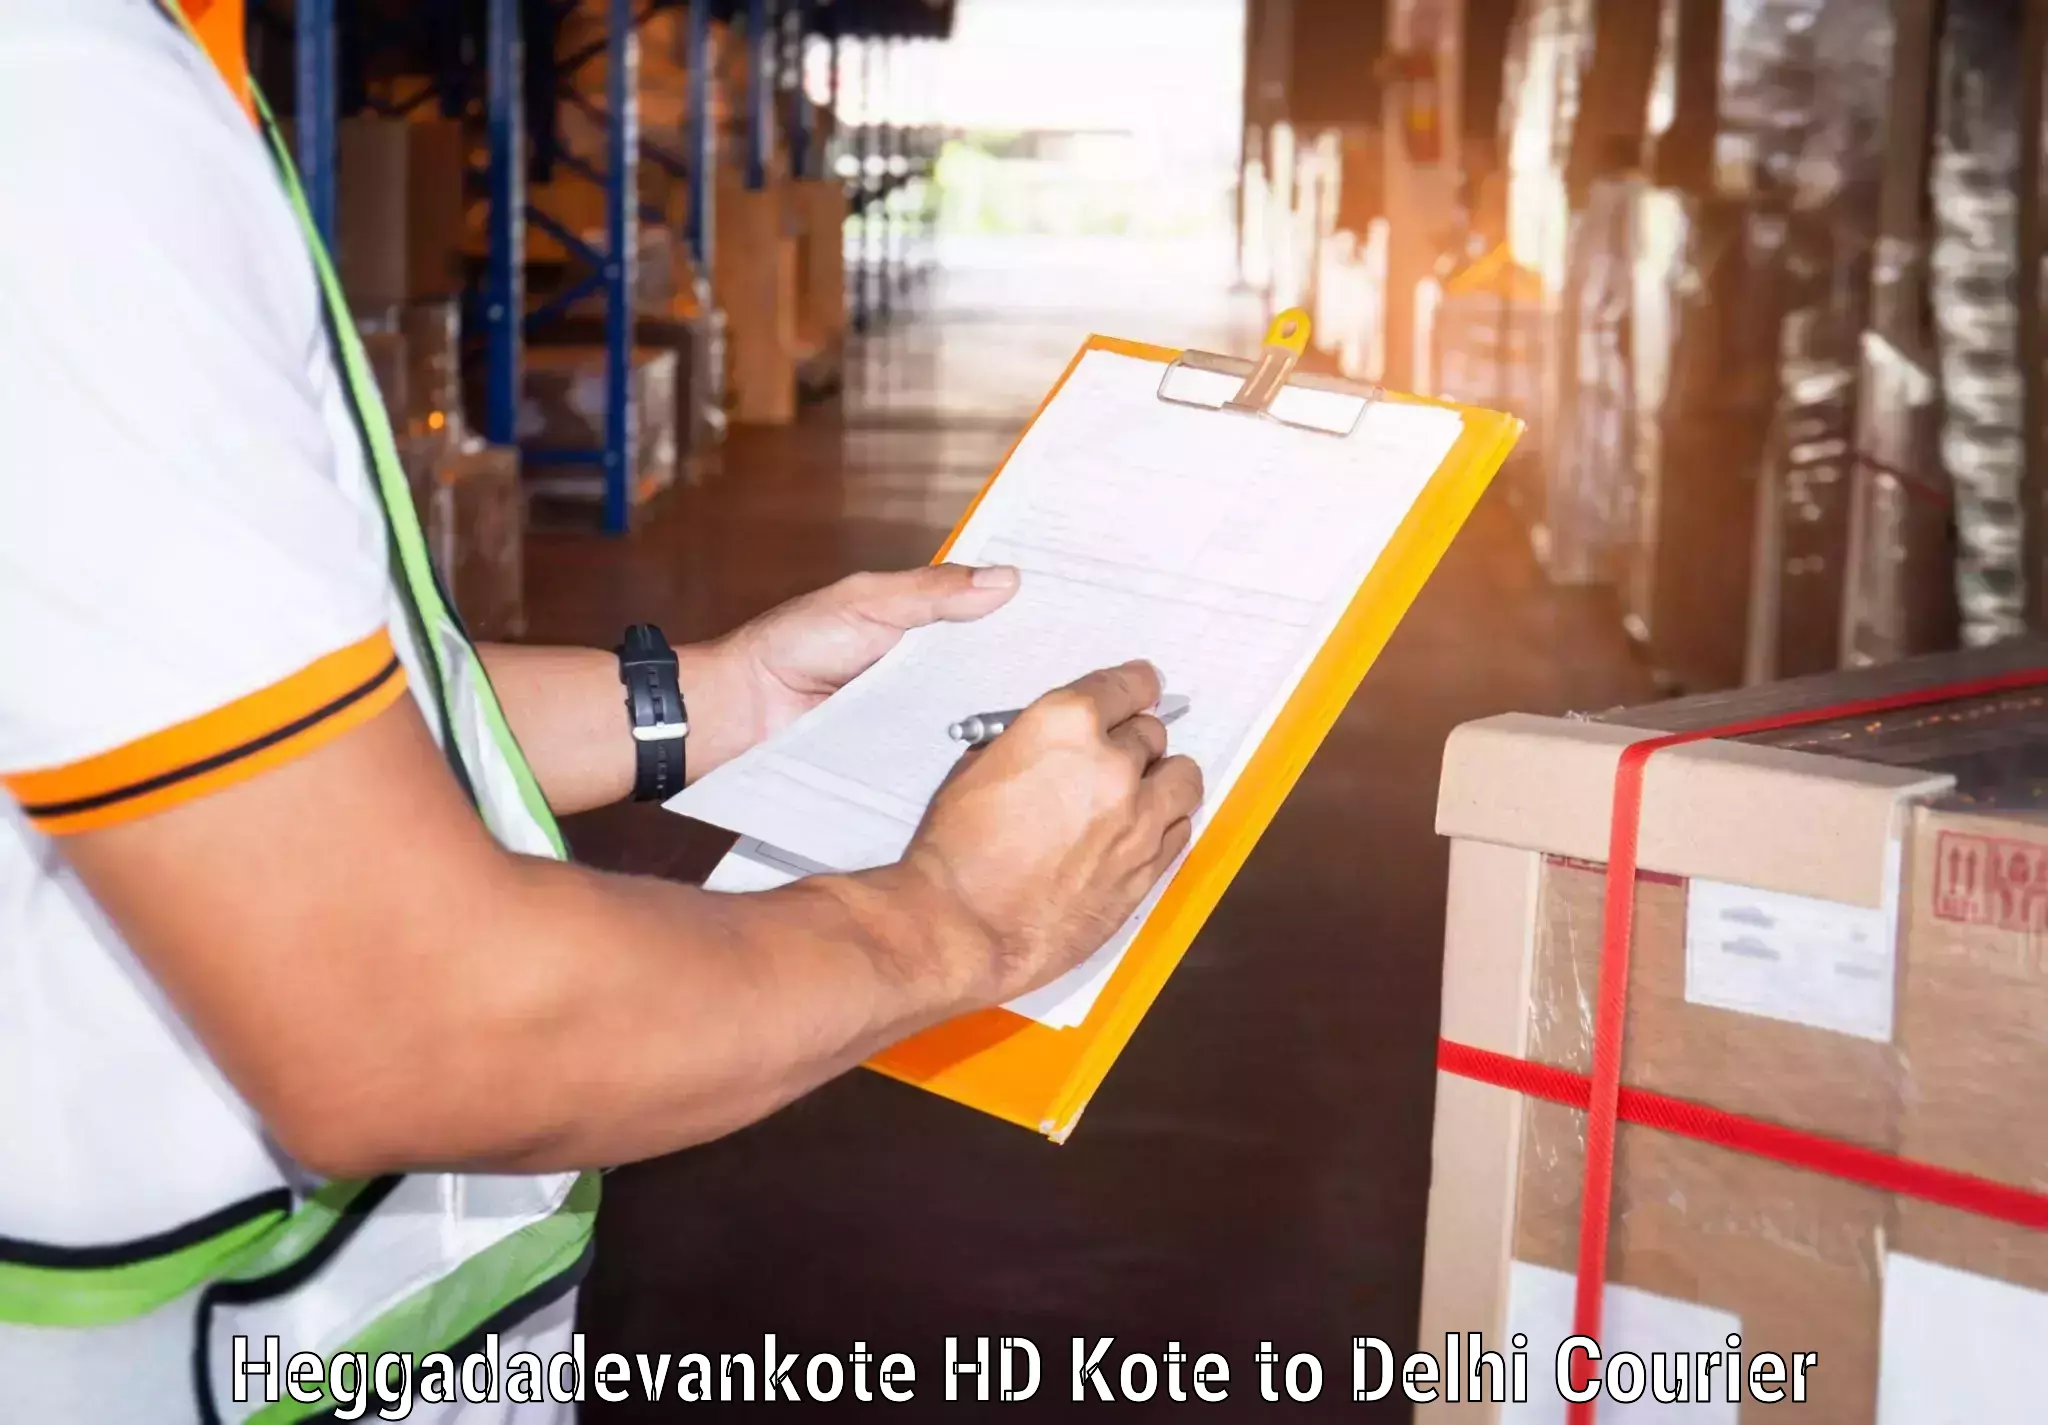 Efficient freight service Heggadadevankote HD Kote to University of Delhi